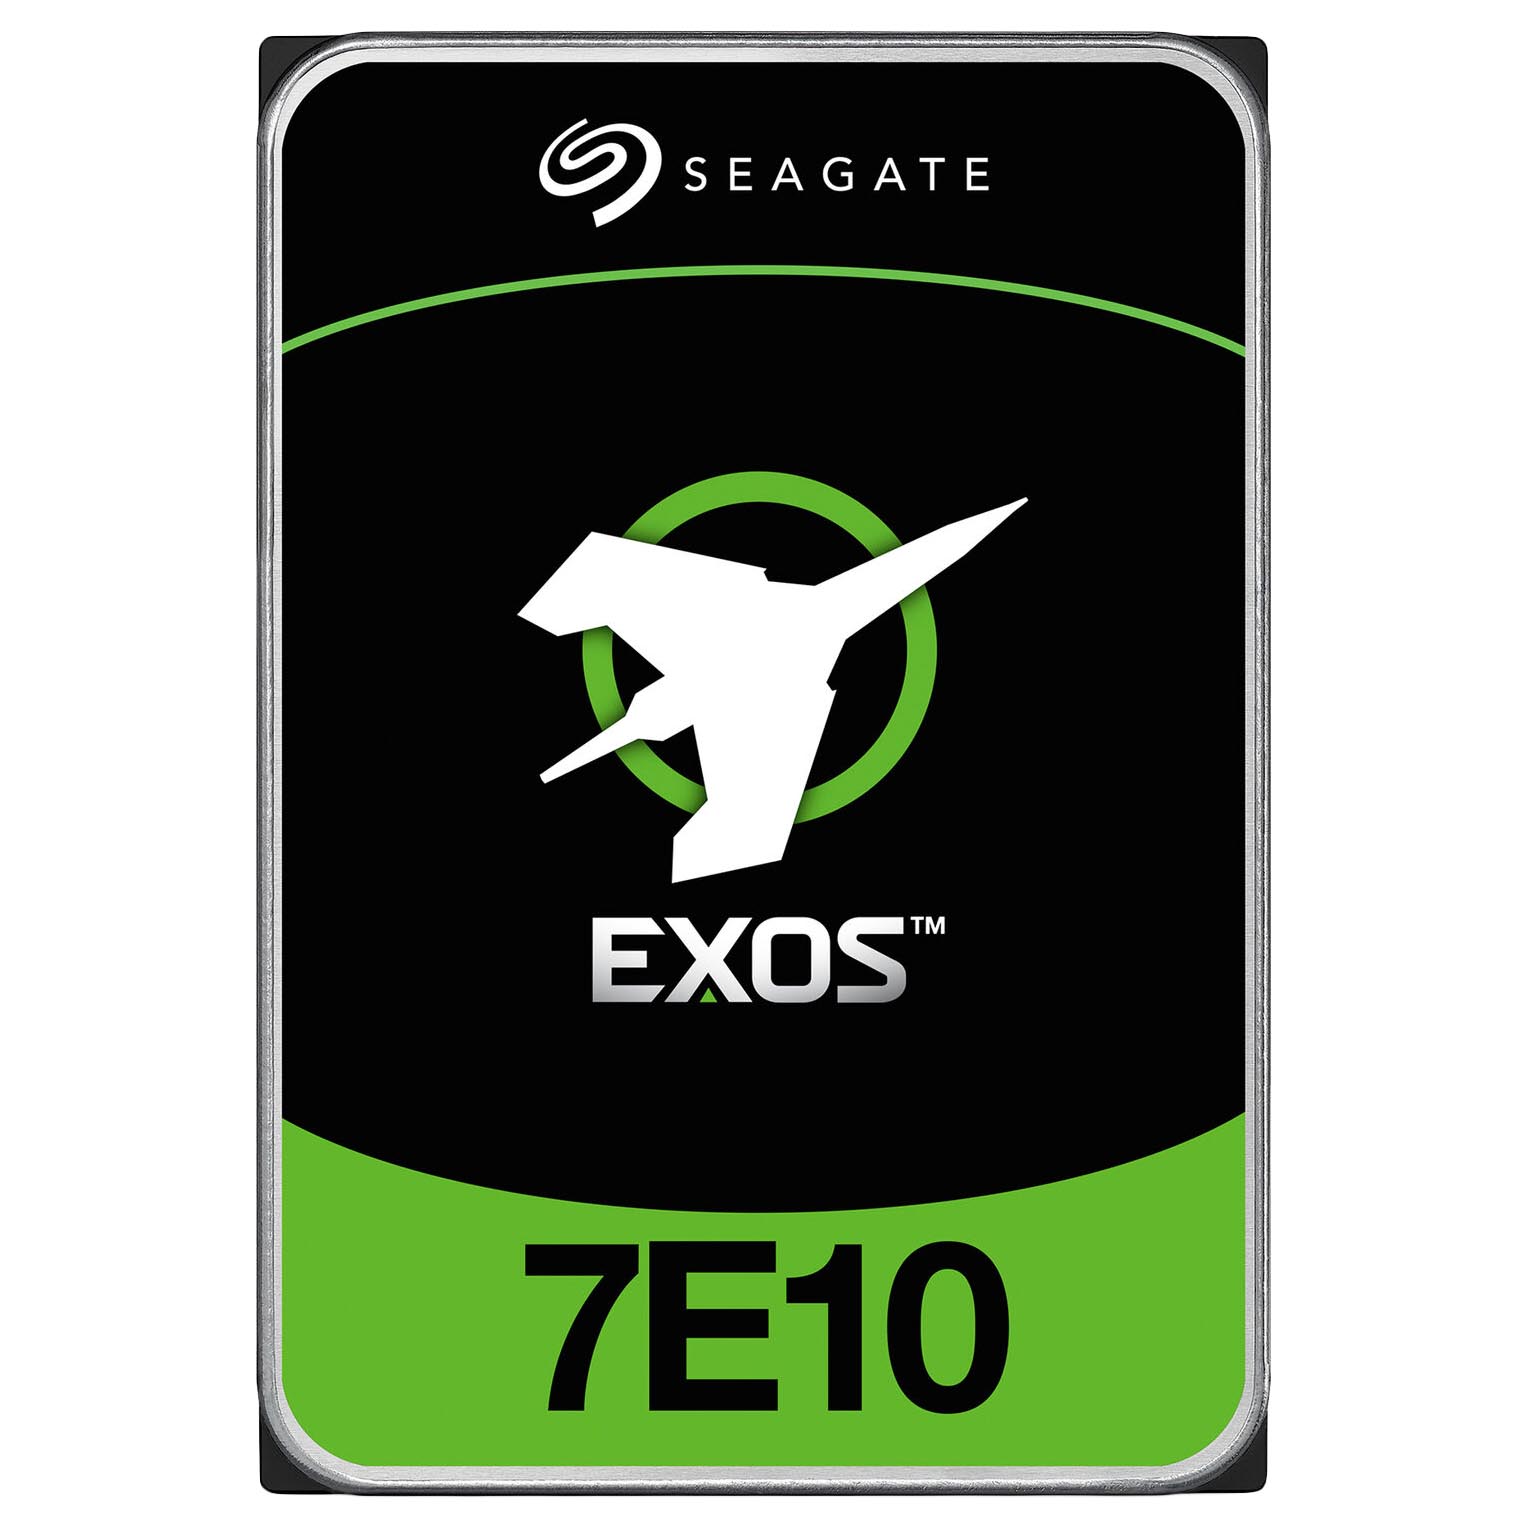 Внутренний жесткий диск Seagate Exos 7E10, ST2000NM001B, 2 Тб жесткий диск seagate exos x20 20 tb st20000nm007d